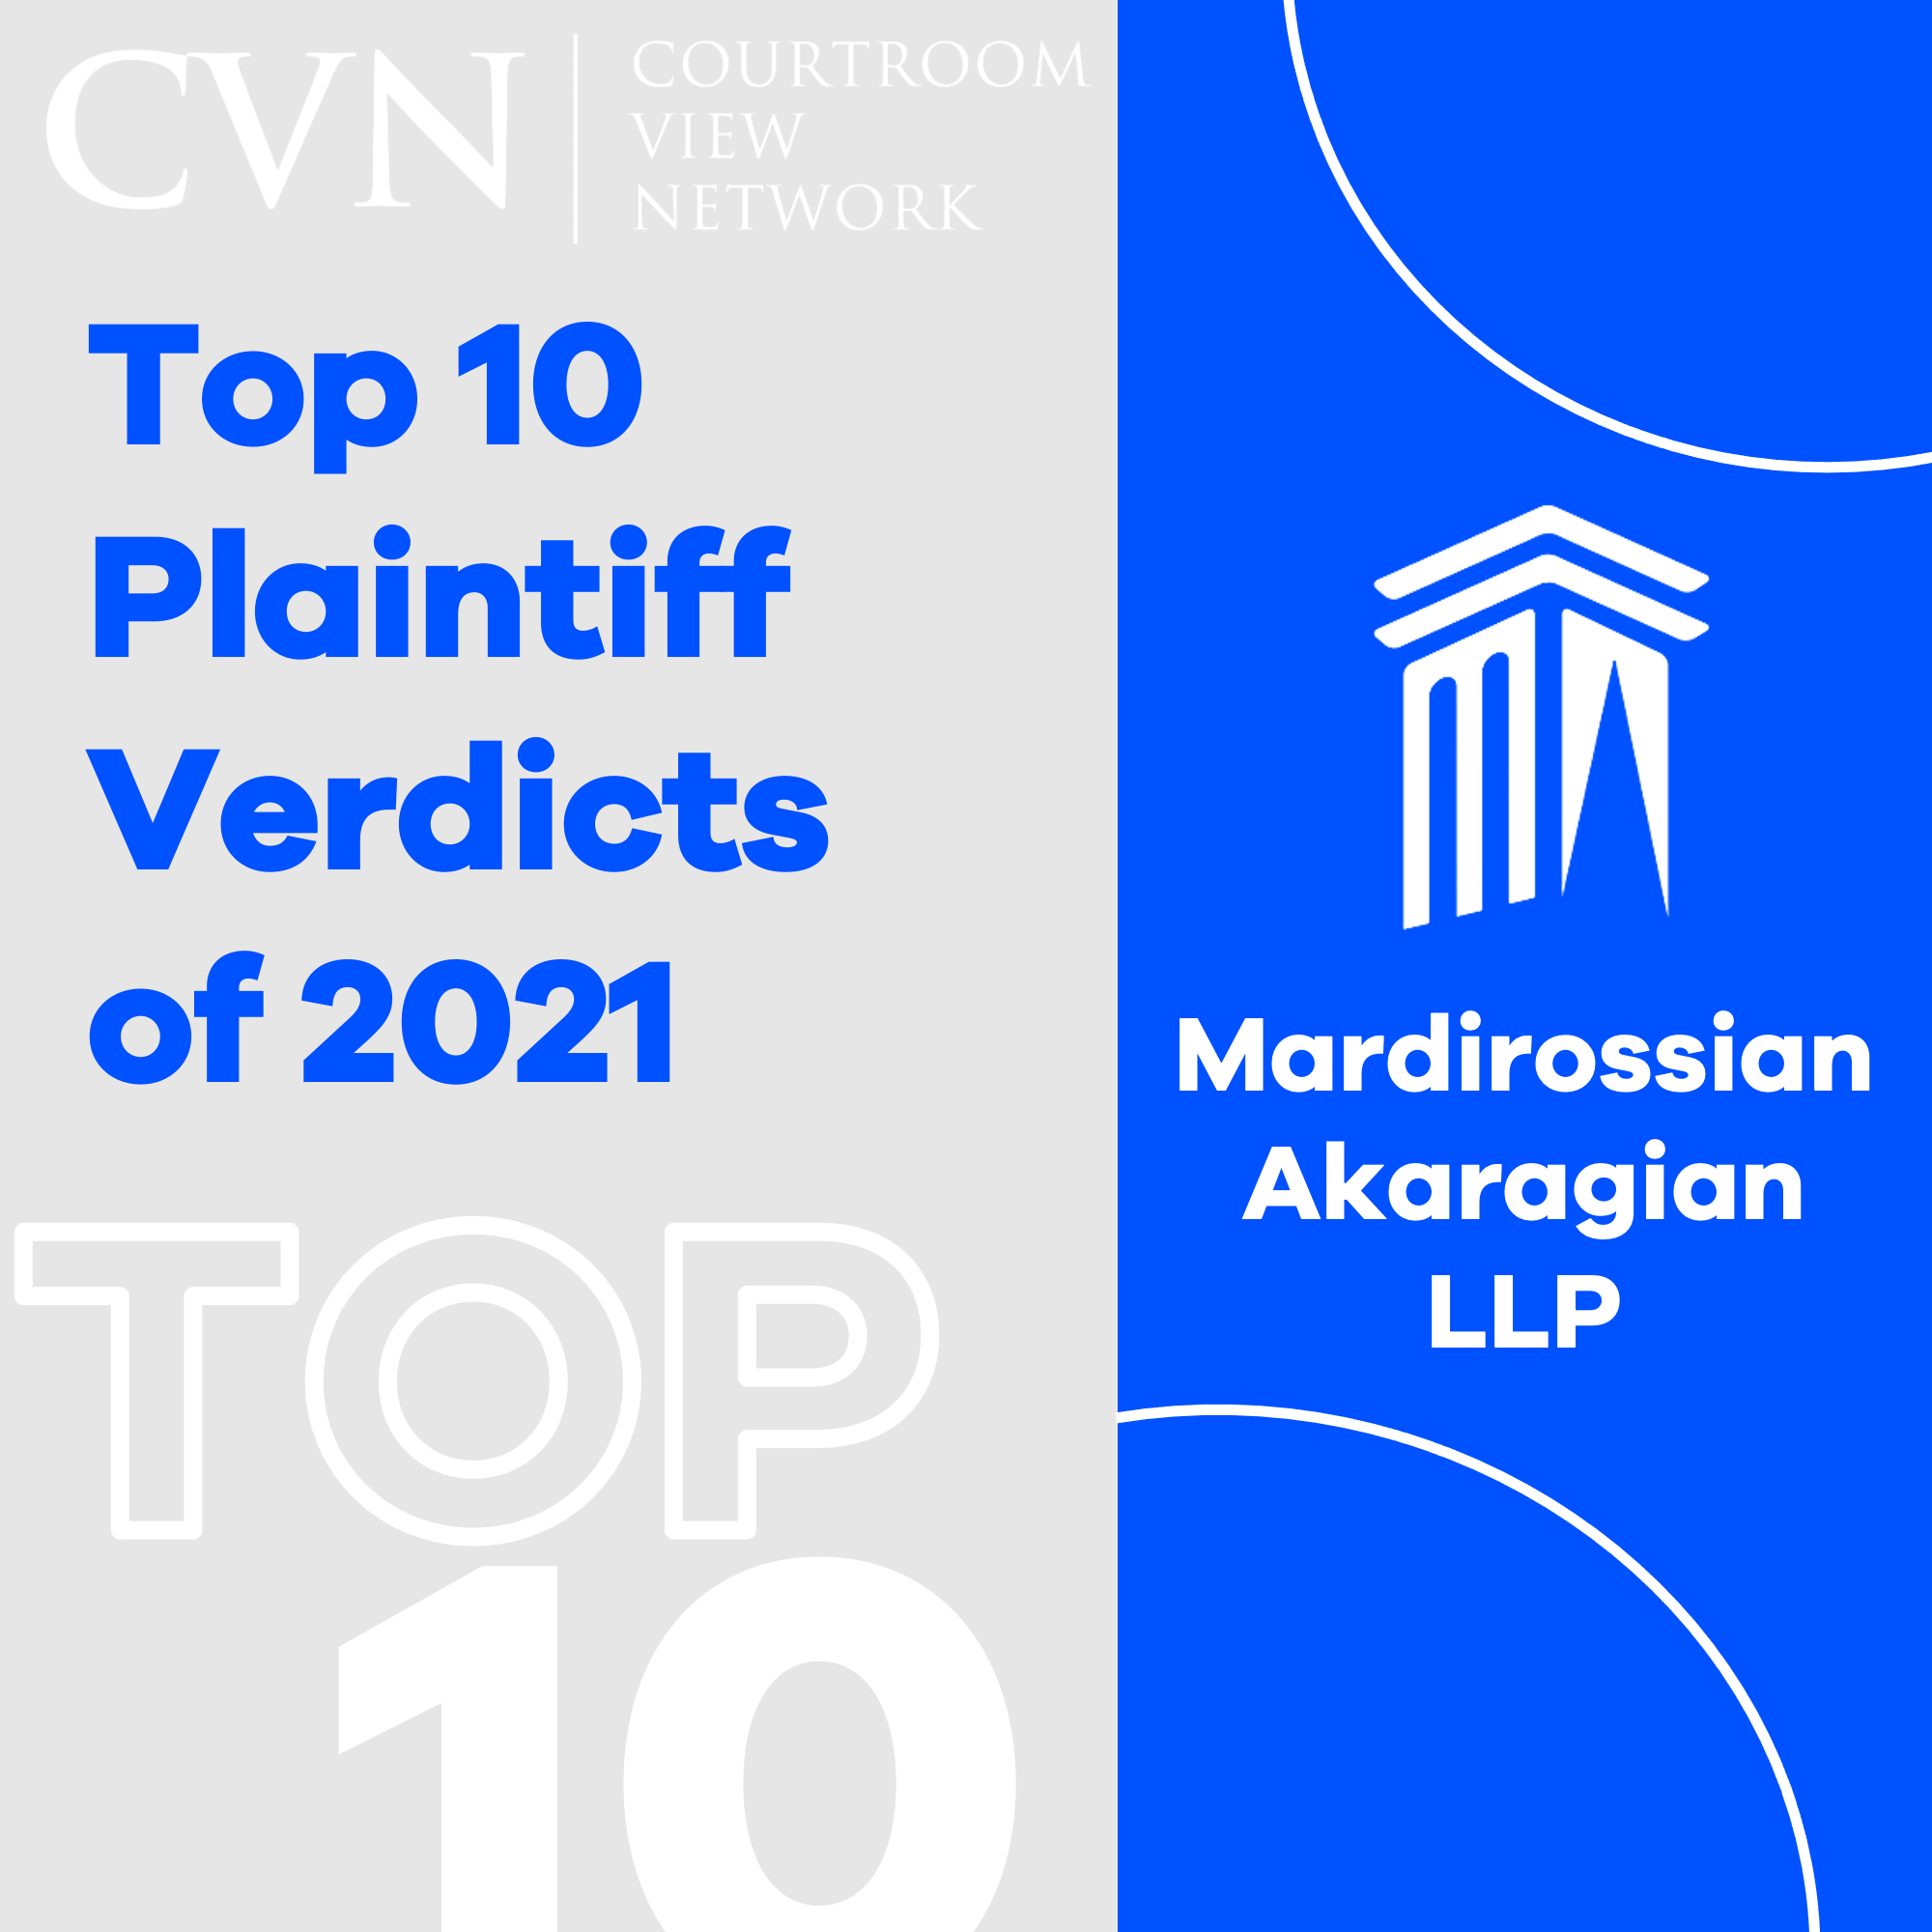 Courtroom View Network’s Top 10 Most Impressive Plaintiff Verdicts Of 2021